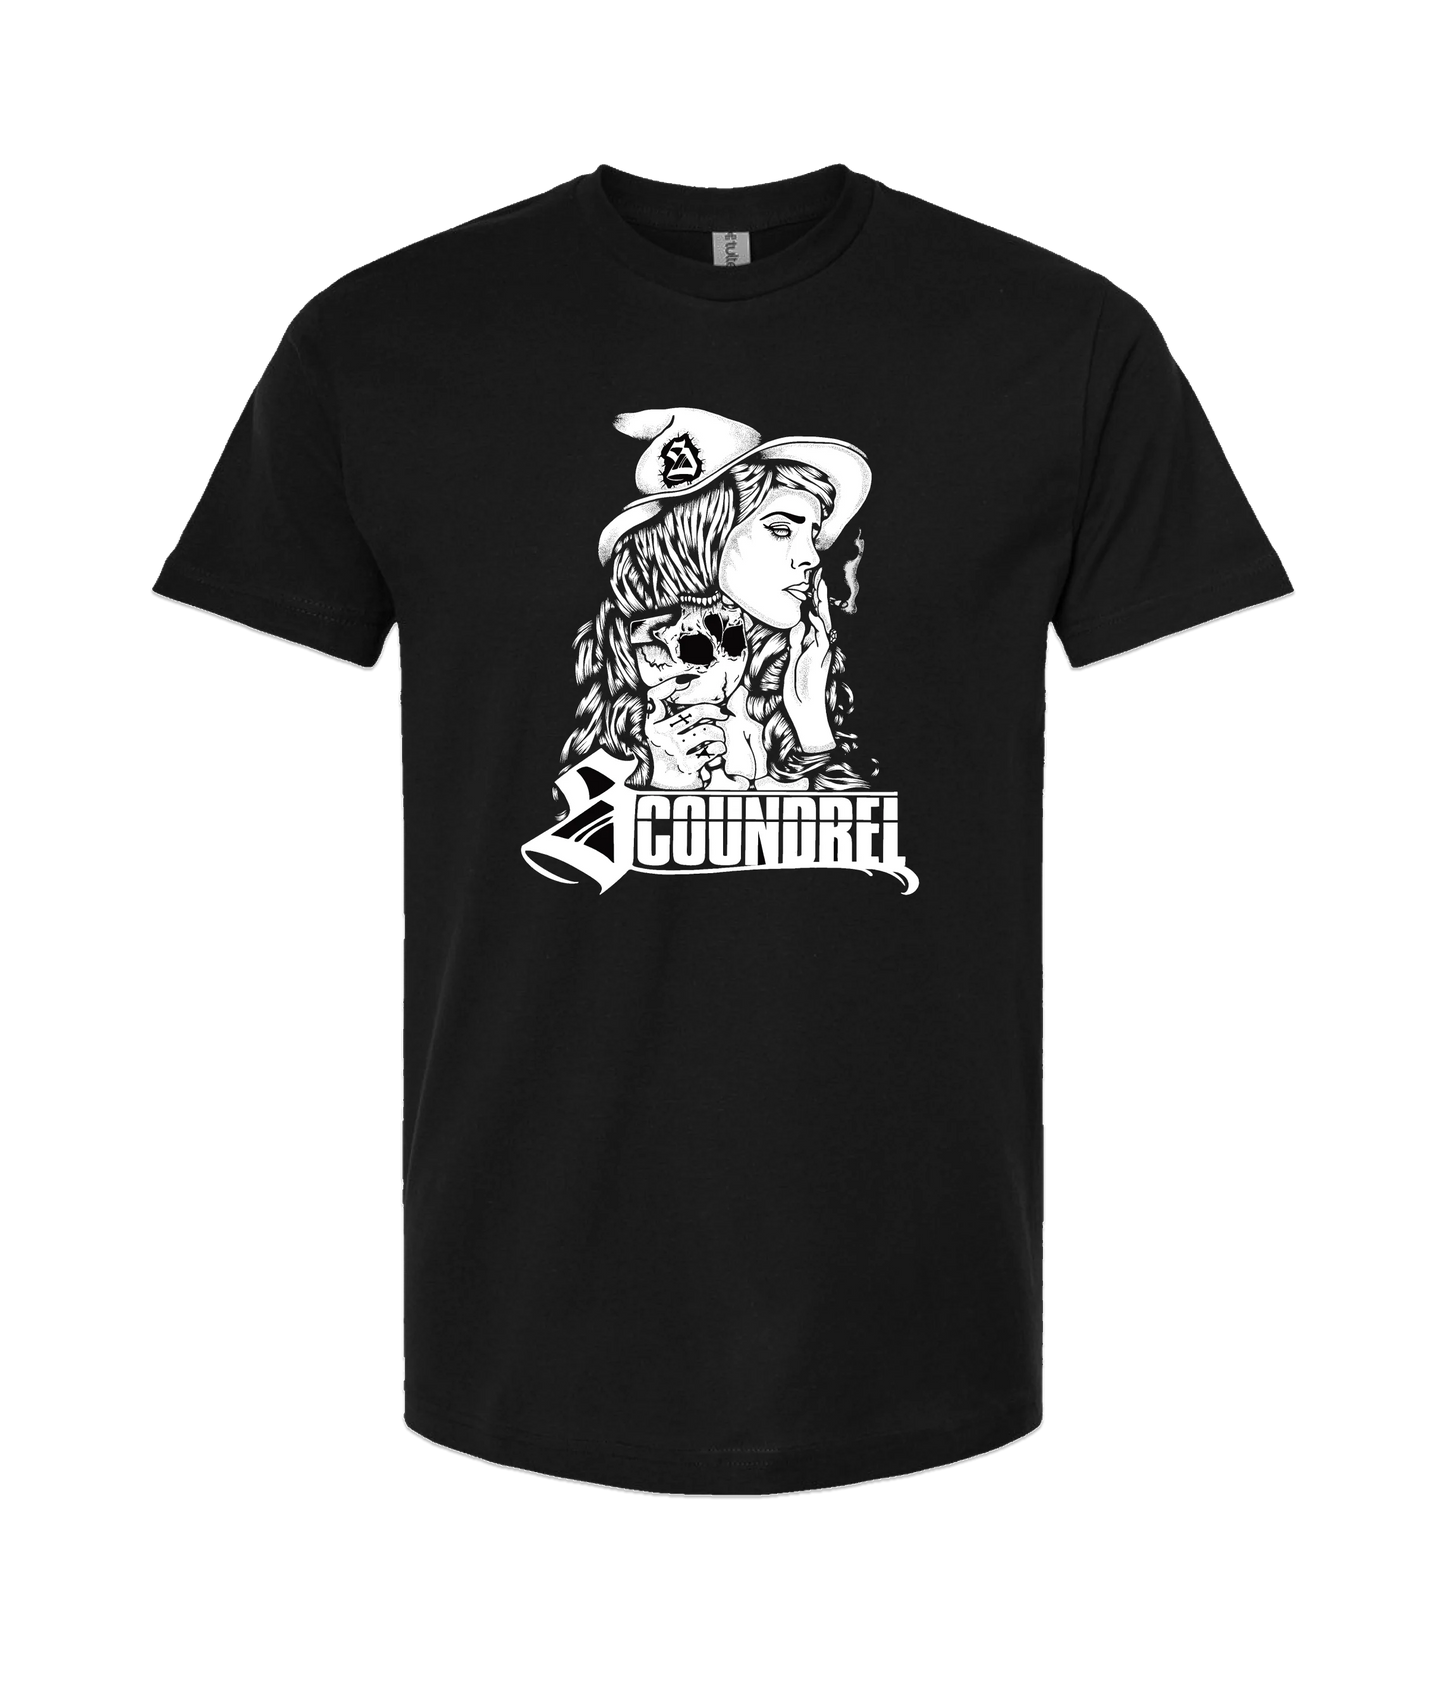 Scoundrel - Witch - Black T Shirt